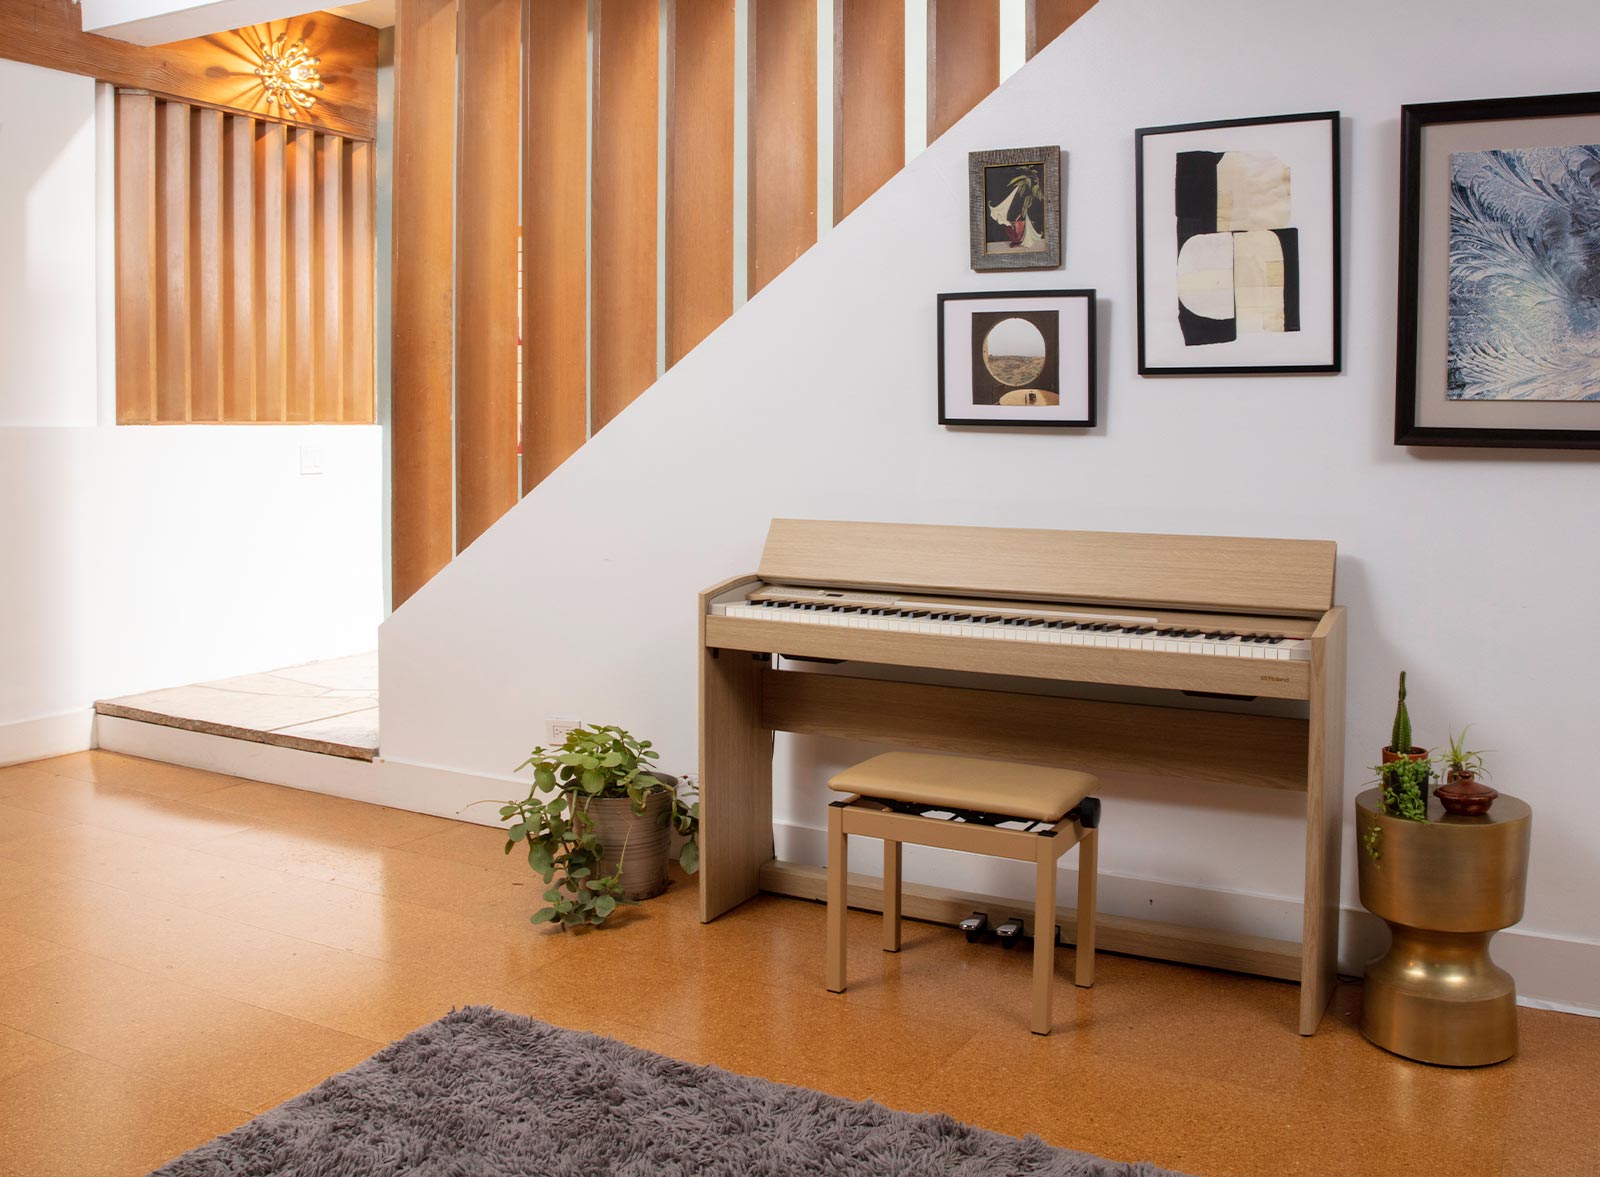 Piano home décor